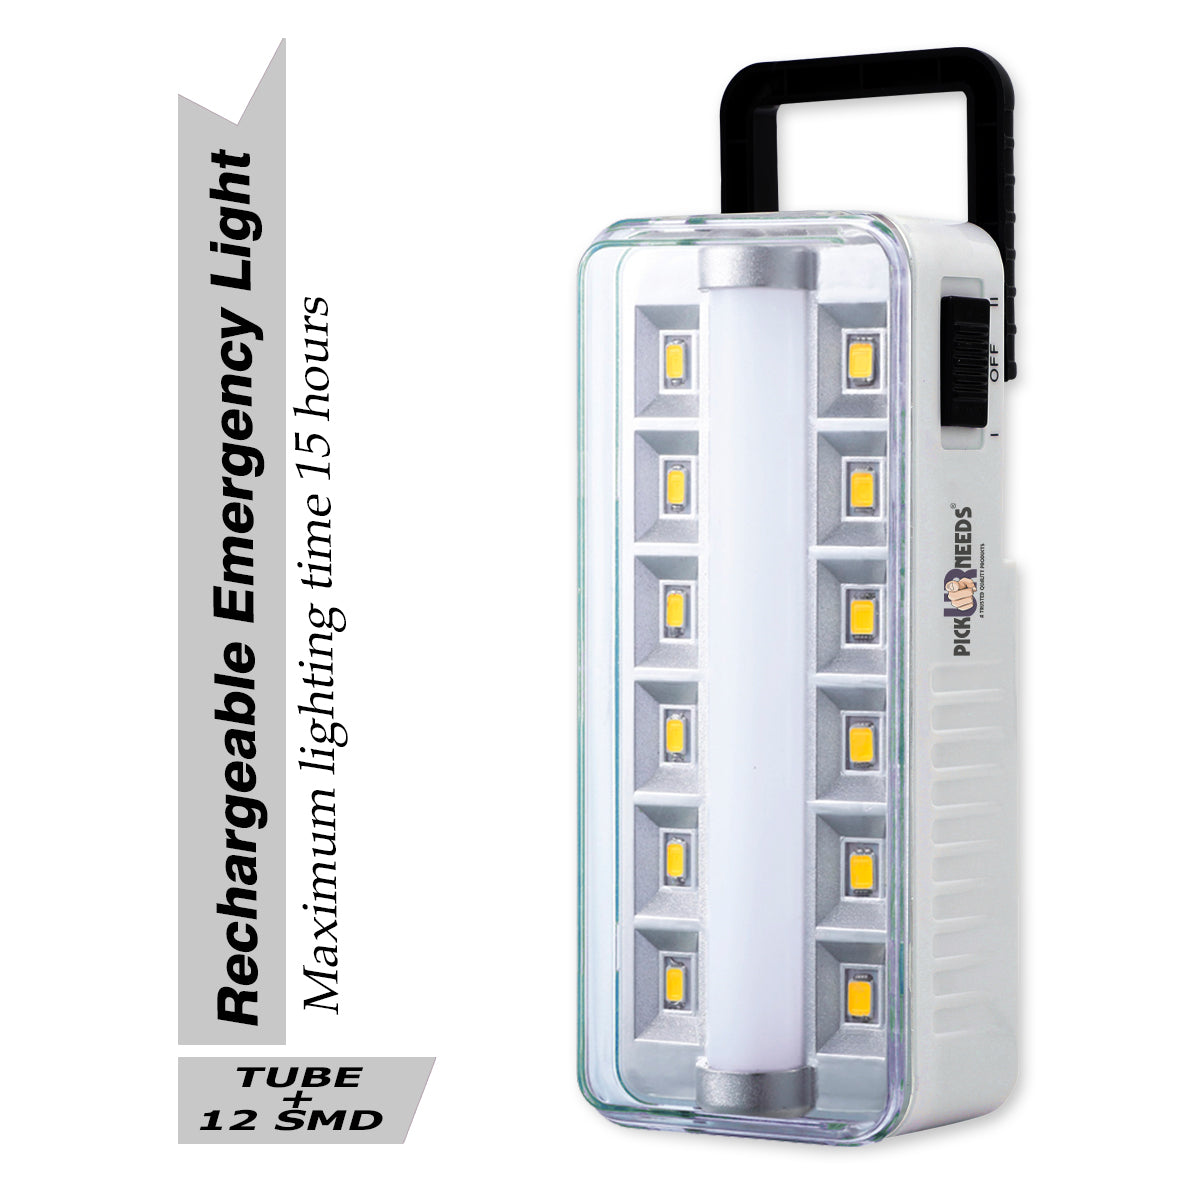 Pick Ur Needs Rechargeable Emergency 12 SMD Powerful Floor LED Lantern Lamp Light